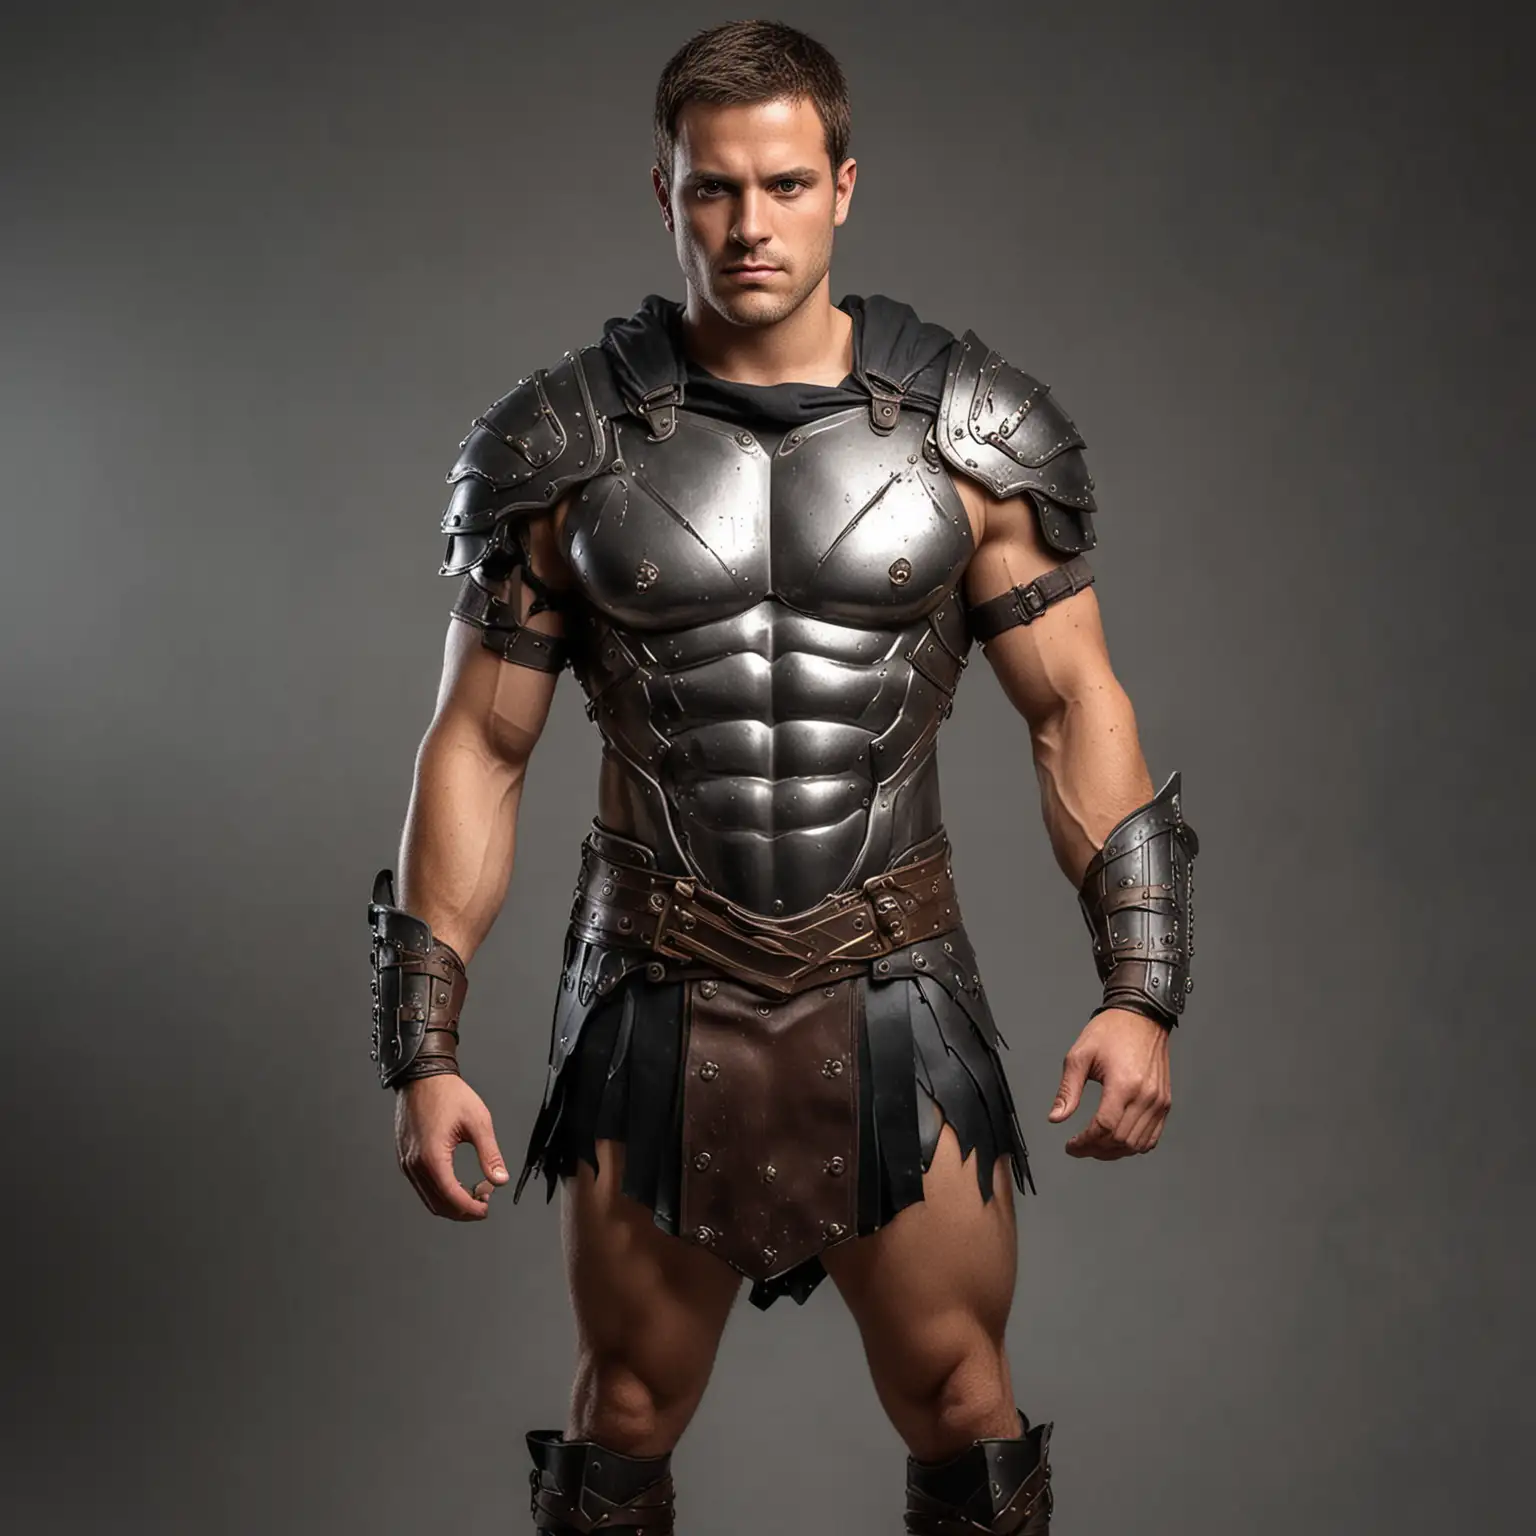 Muscular Spartan Warrior in Steel Body Armor and Cloak